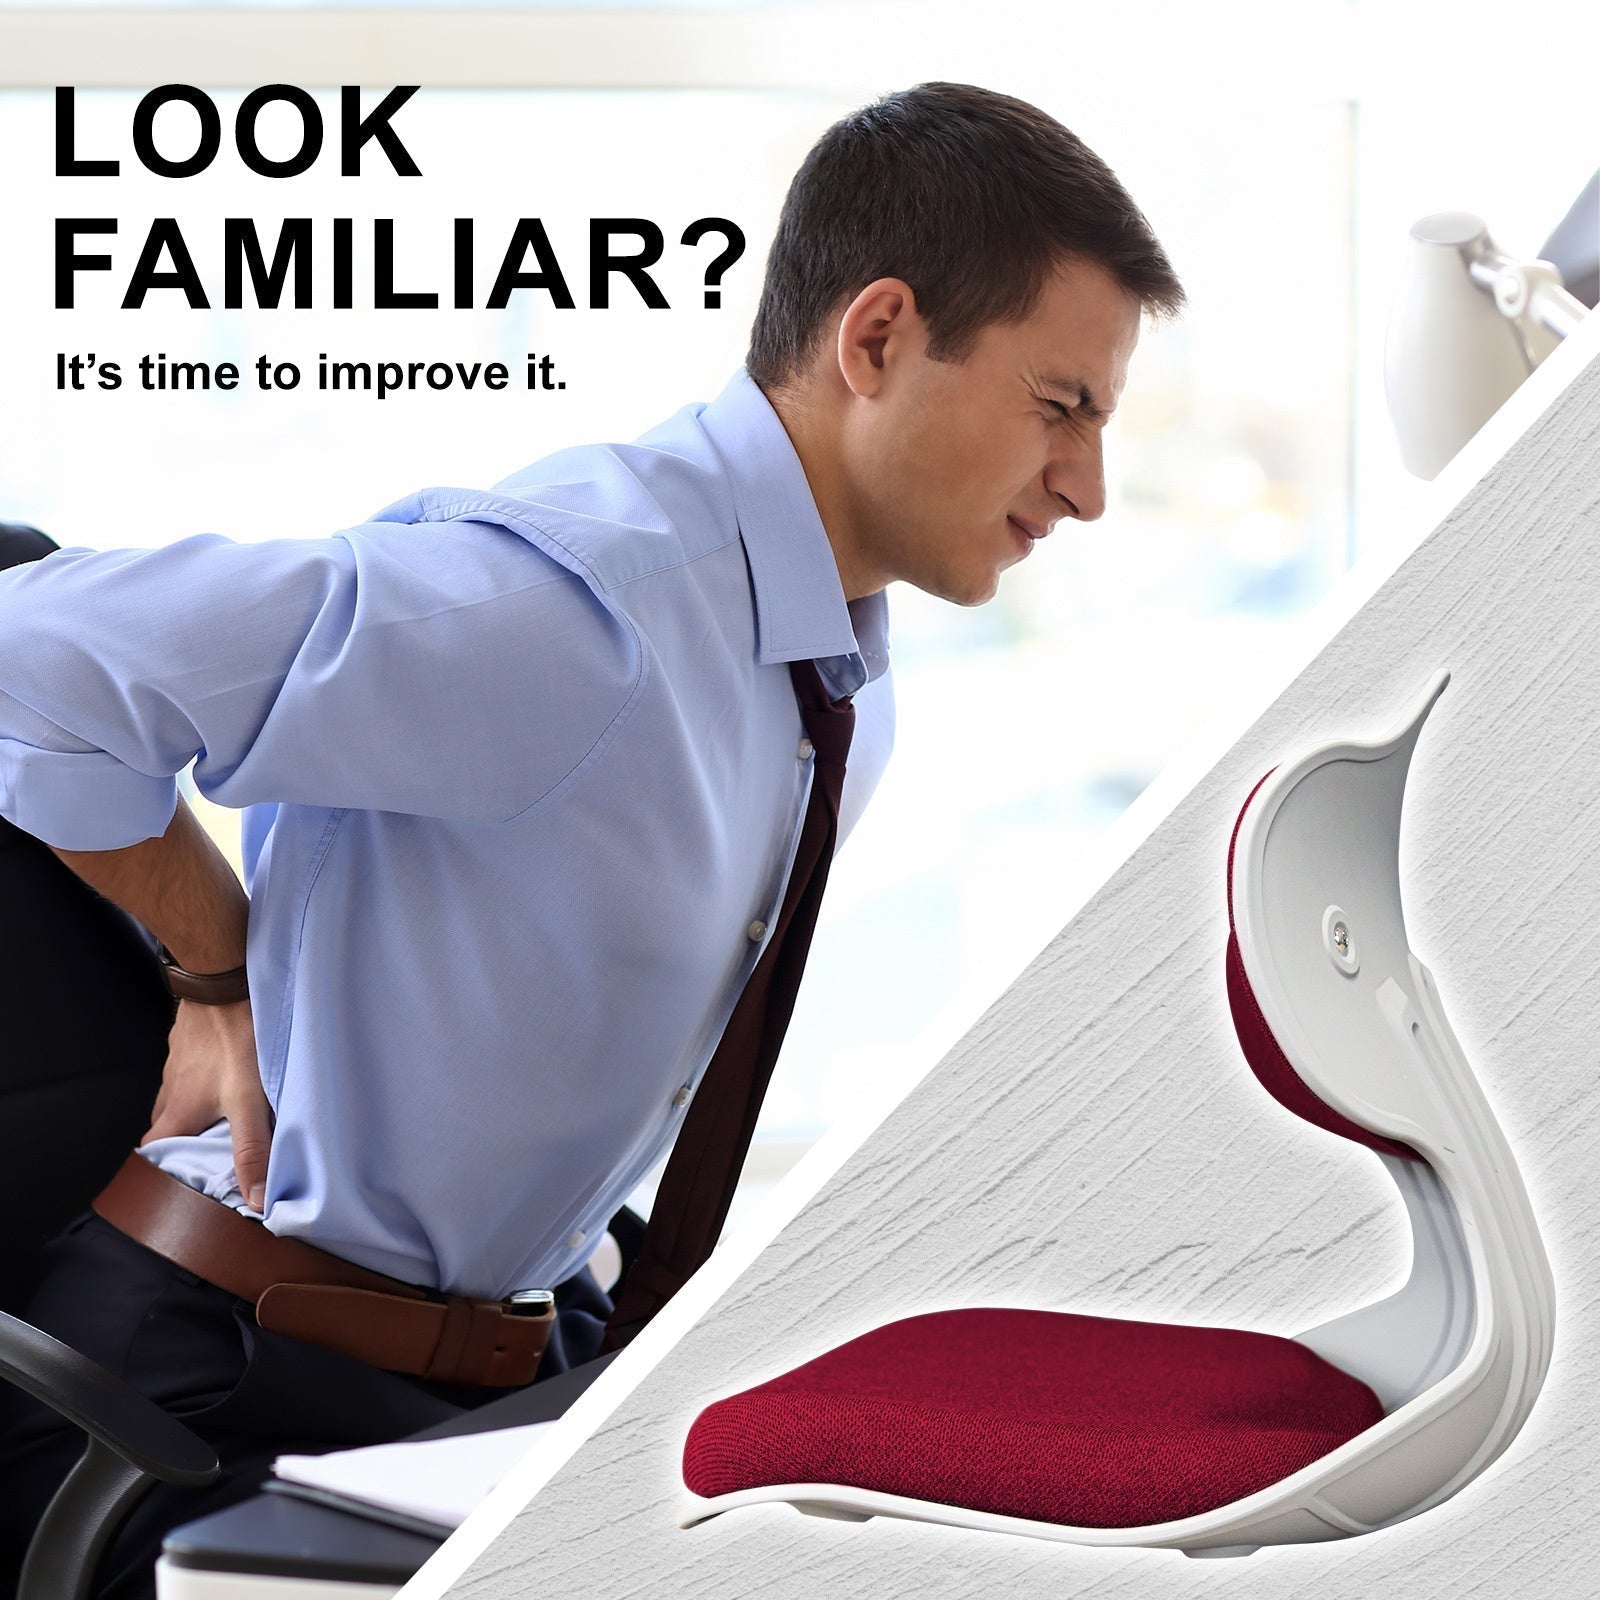 Samgong 4 Set Red Slender Chair Posture Correction Seat Floor Lounge Stackable